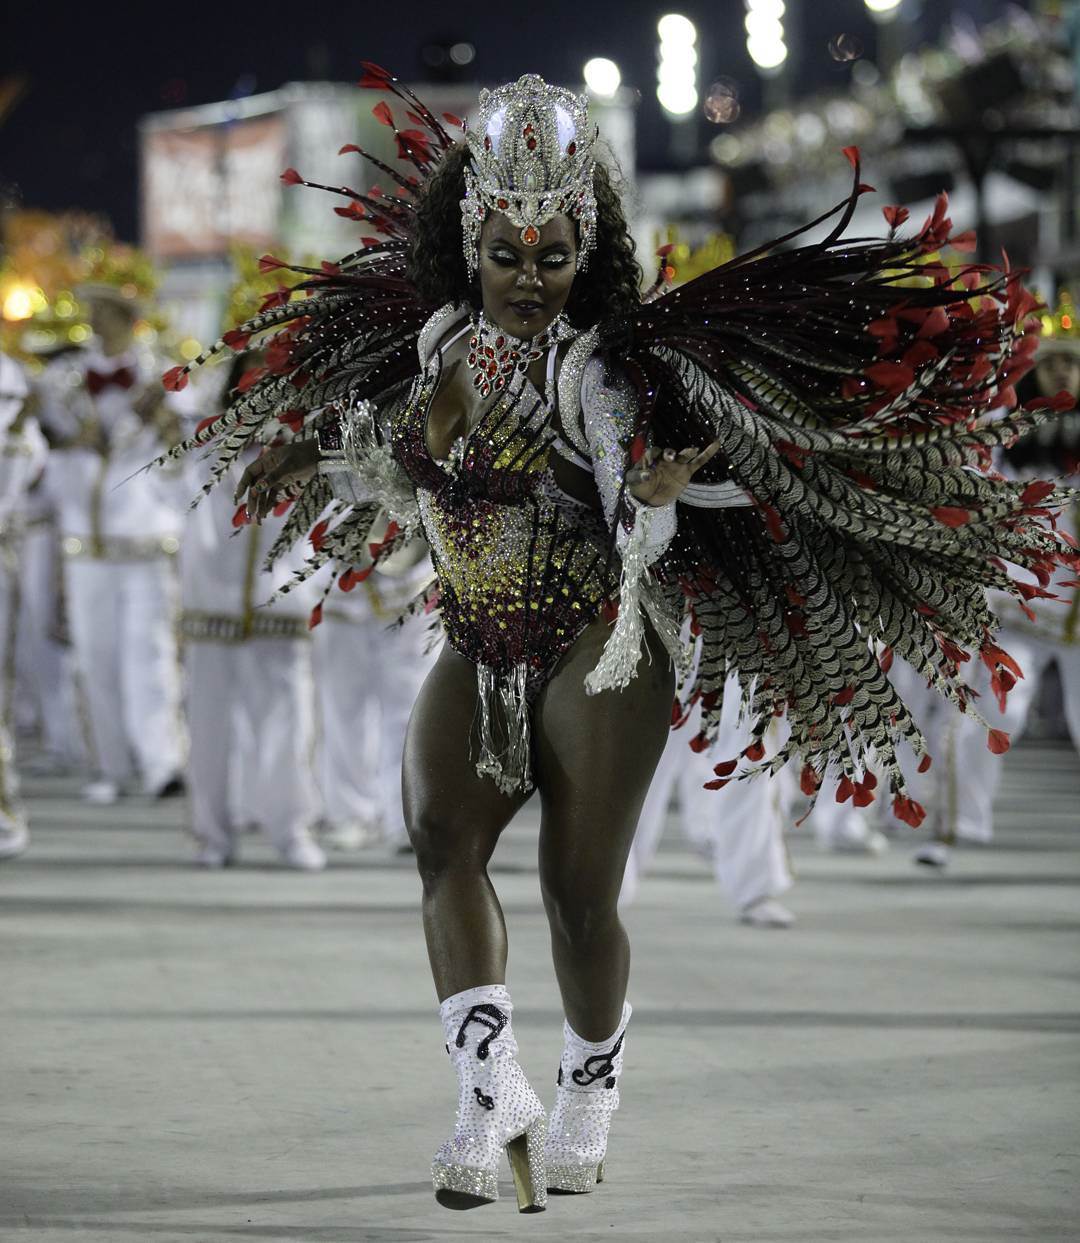 Karnaval. Карнавал в Рио-де-Жанейро Бразилия. Карнавал в Рио-де-Жанейро 2018. Карнавал в Рио-де-Жанейро шествие. Карнавал Рио (Rio Carnival).